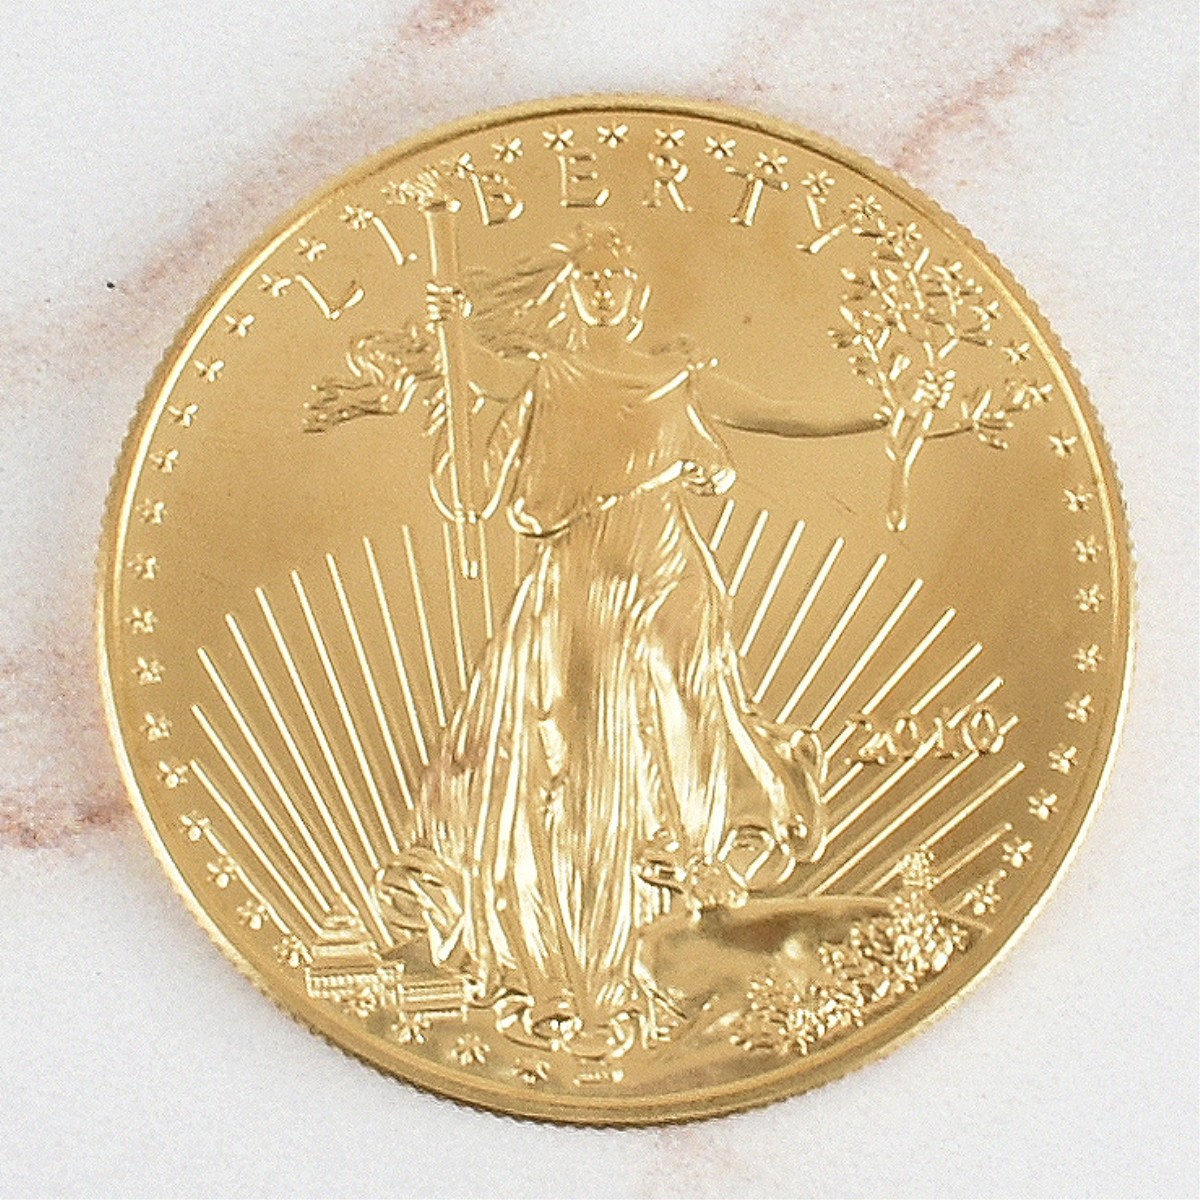 2010 US $50 Gold Eagle Coin